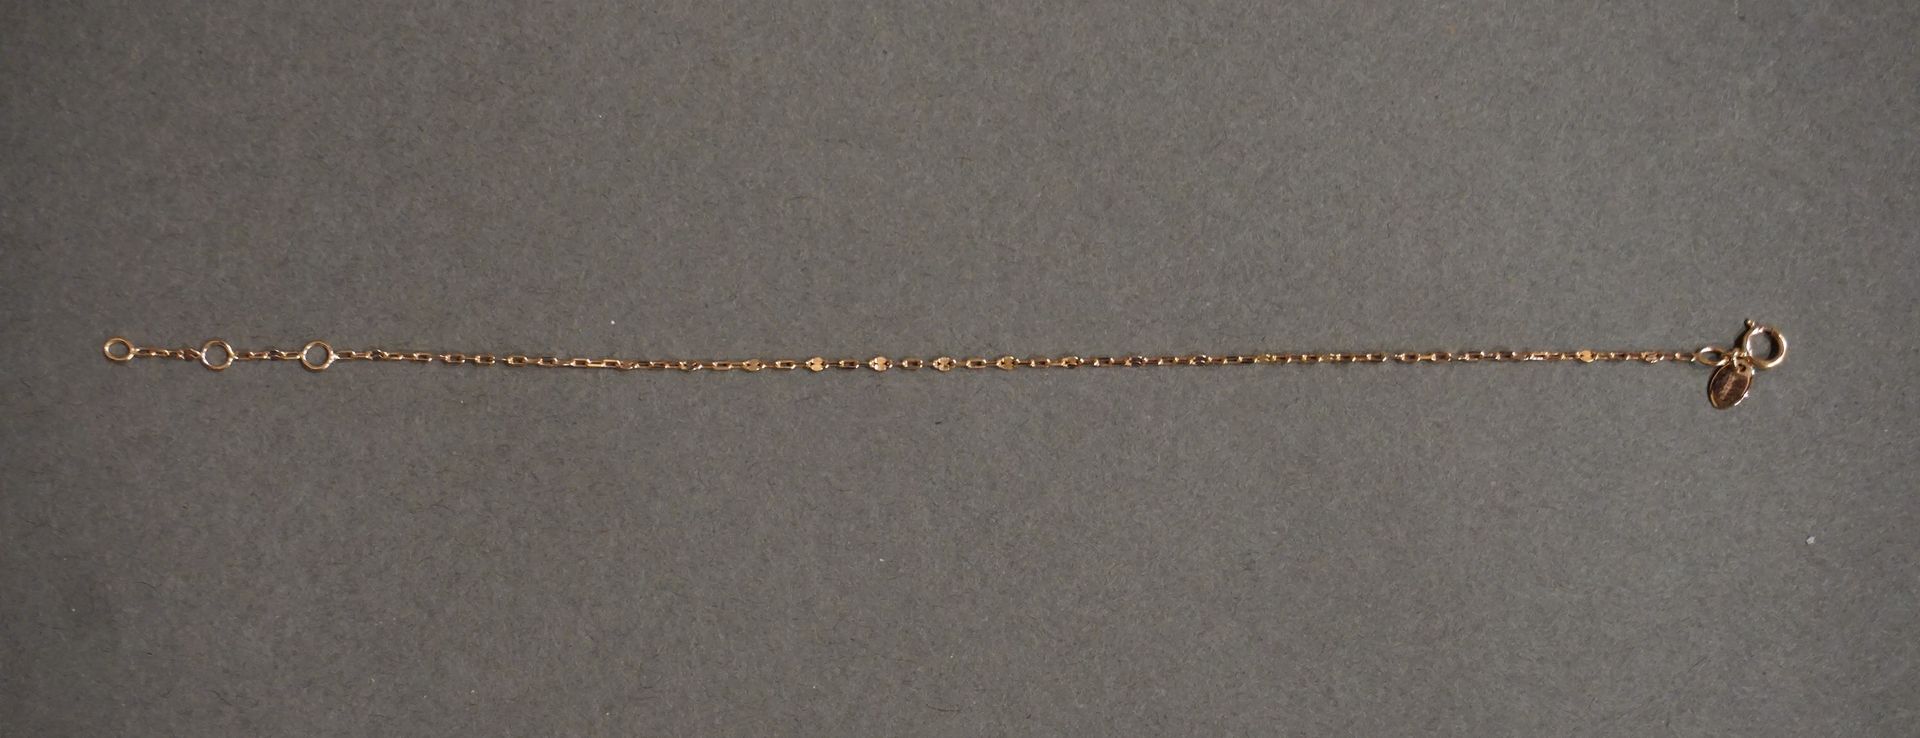 Bracelet 签名为 "GUERIN "的小椭圆奖章金链子（1.5grs）